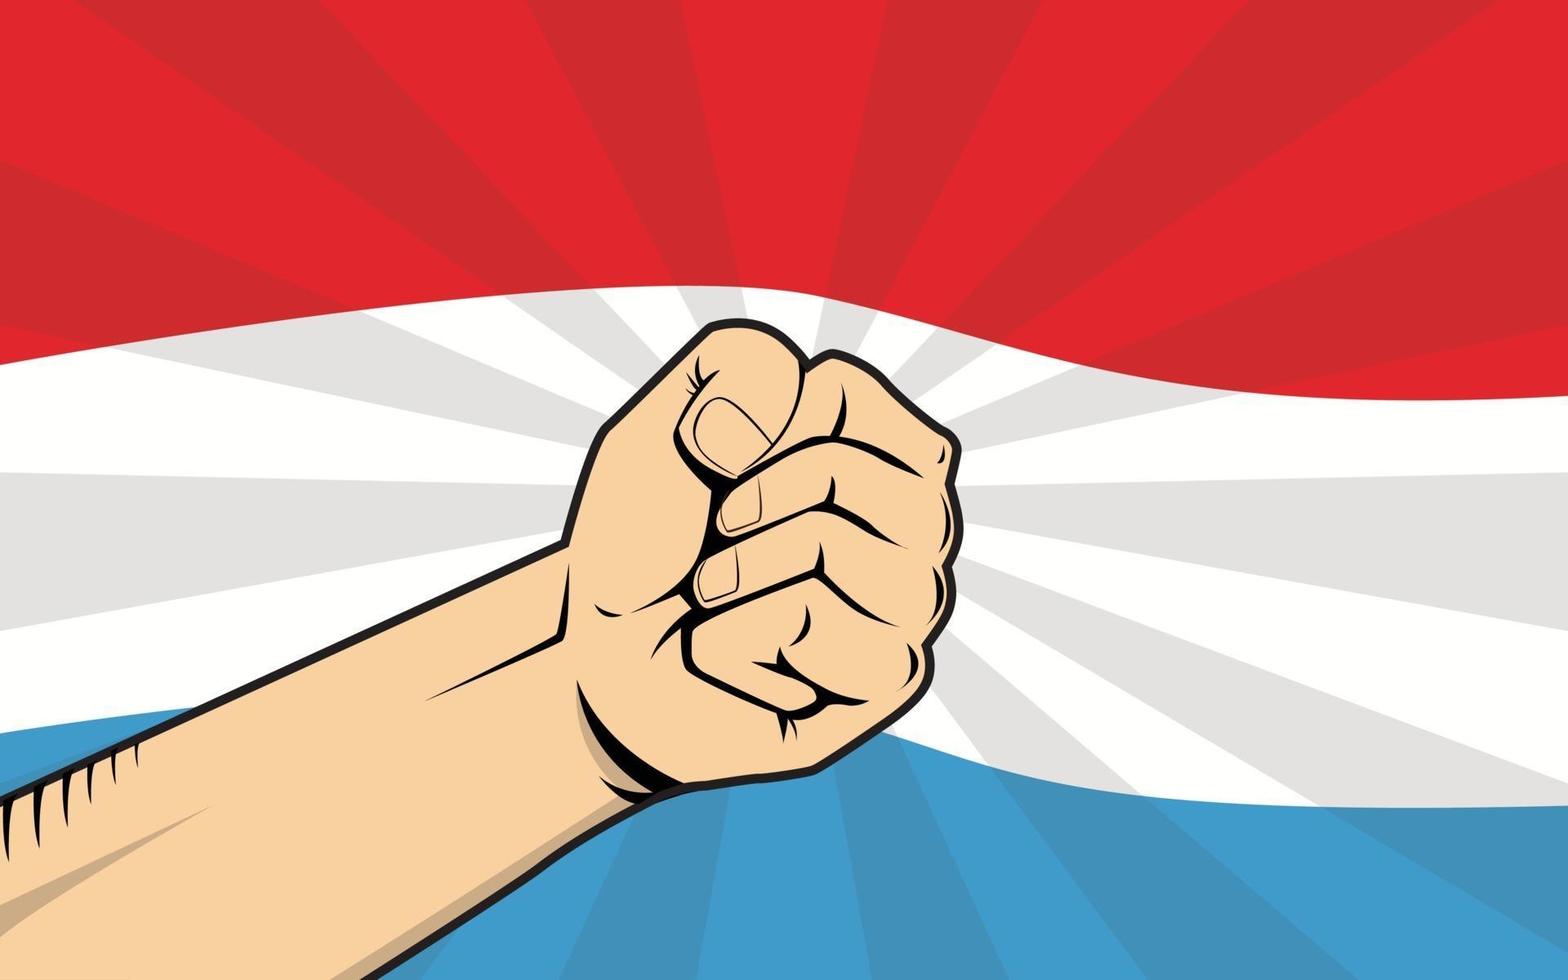 luxemburg vecht protest symbool met sterke hand en vlag vector